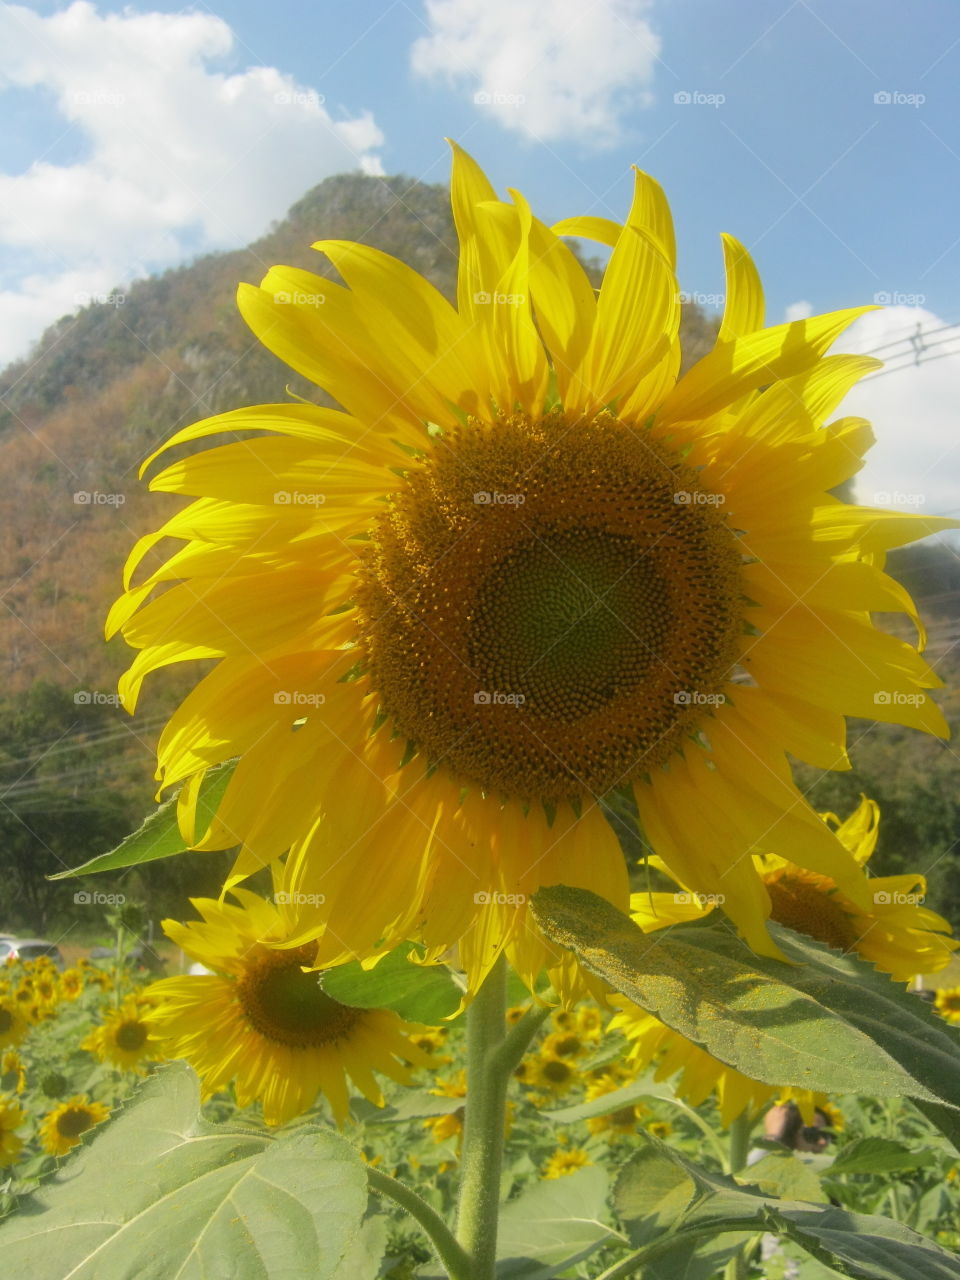 The sun Flower